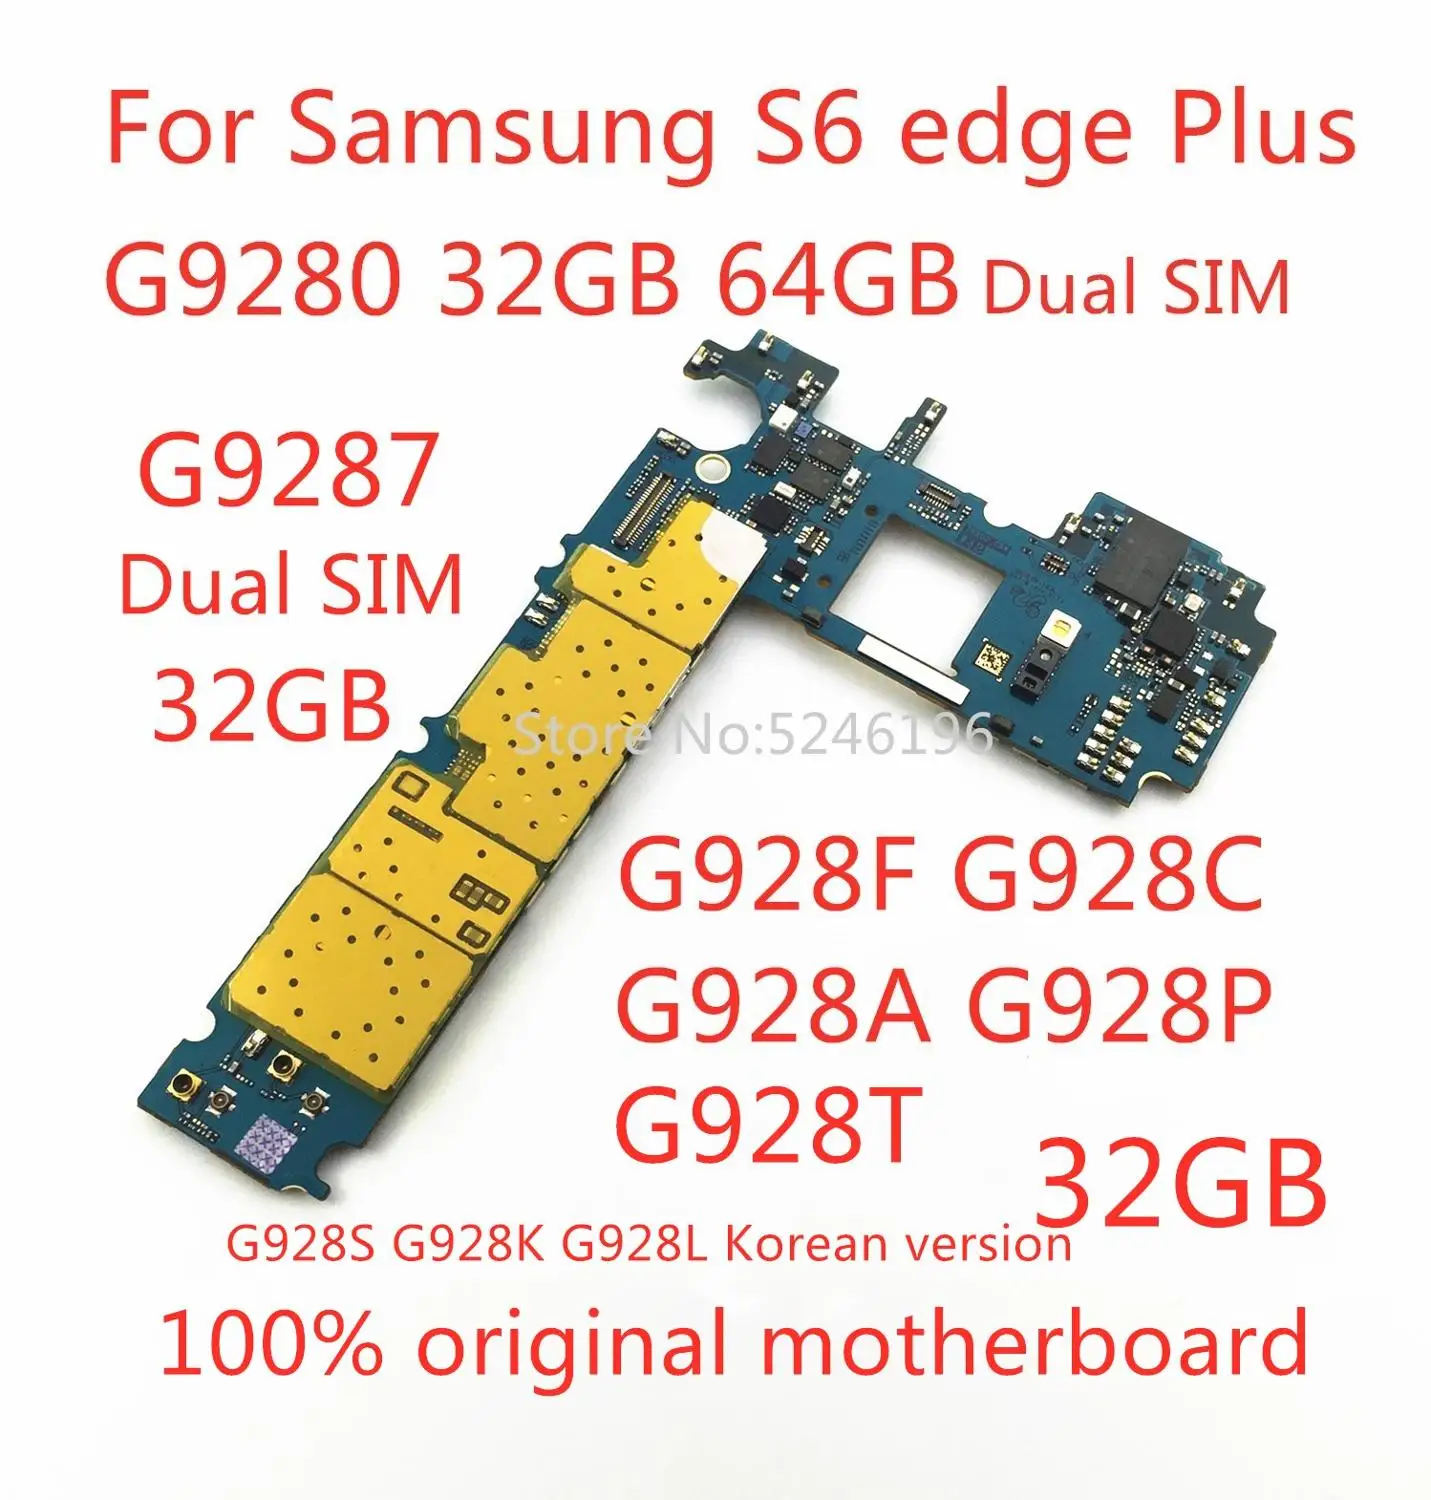 For Samsung Galaxy S6 edge Plus G928F G928C G928A G928P G928T G9287 G9280 32GB 64GB original unlocked motherboard replacement